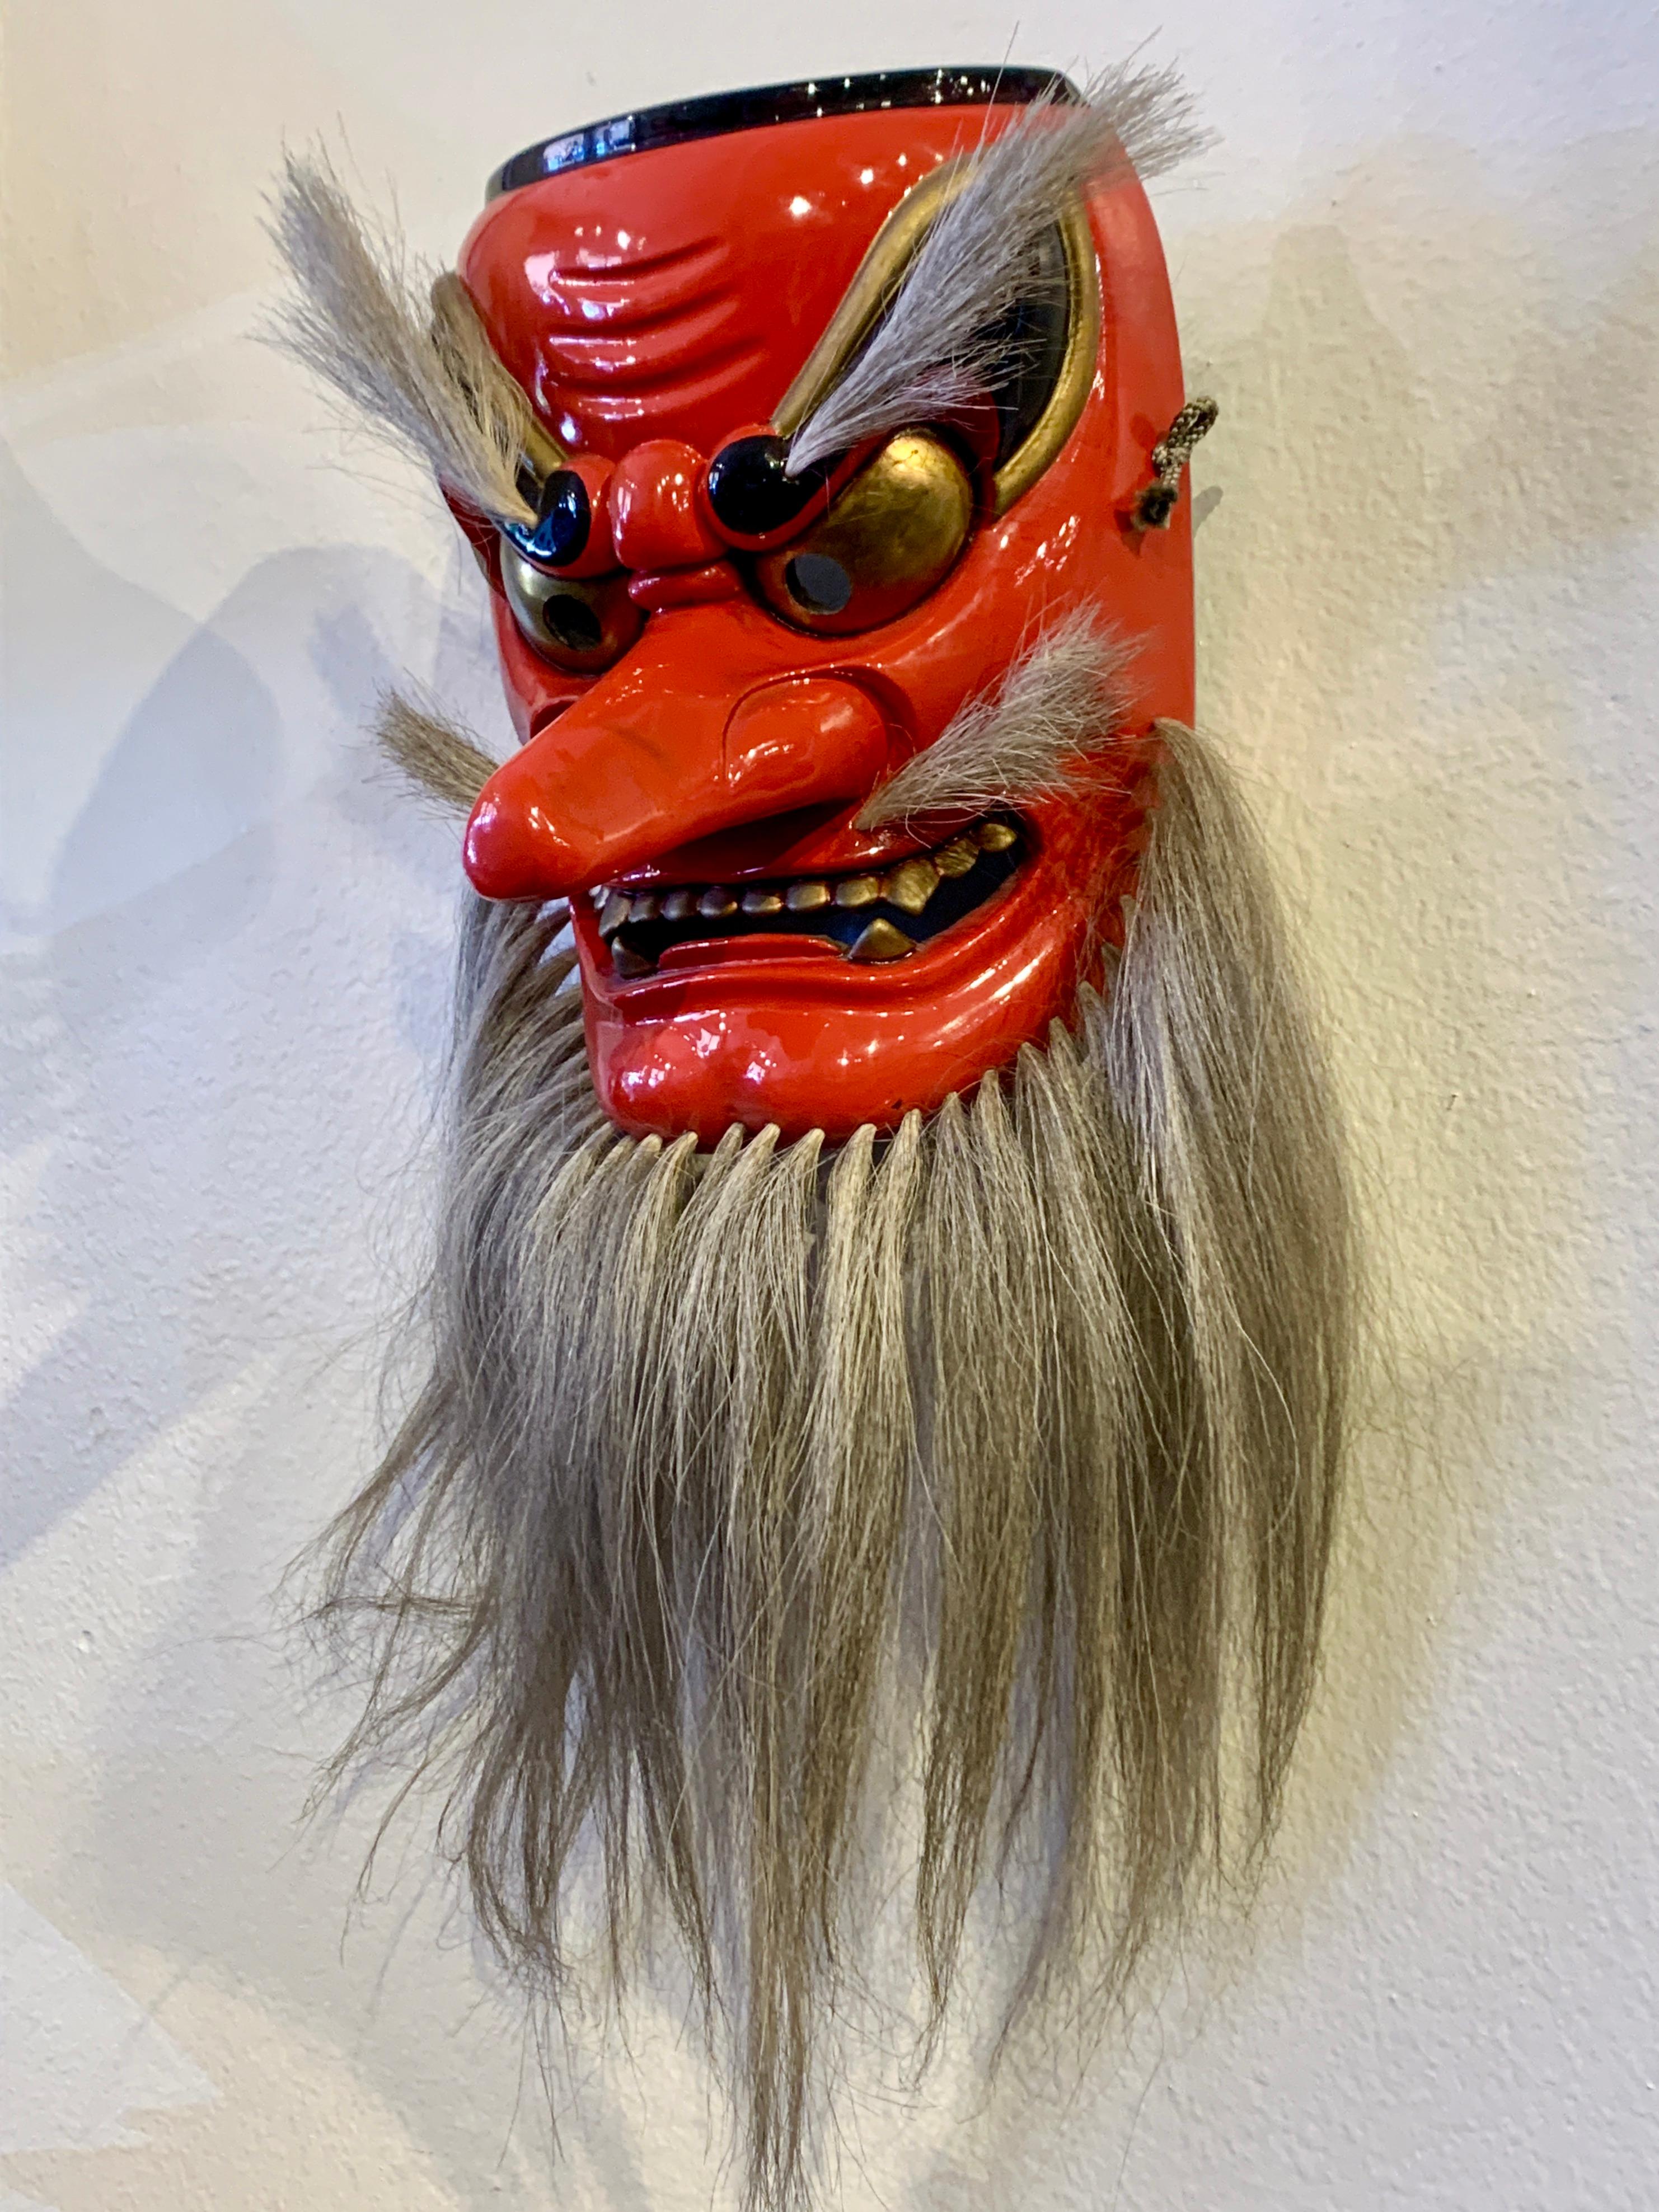 A bold and powerful kagura mask of the Shinto deity Sarutahiko Okami by Kiyomi Yokota, Showa or Heisei Era, late 20th century, Japan.

The mask depicts the Japanese Shinto deity Sarutahiko Okami, the Shinto deity of martial arts, and leader of the